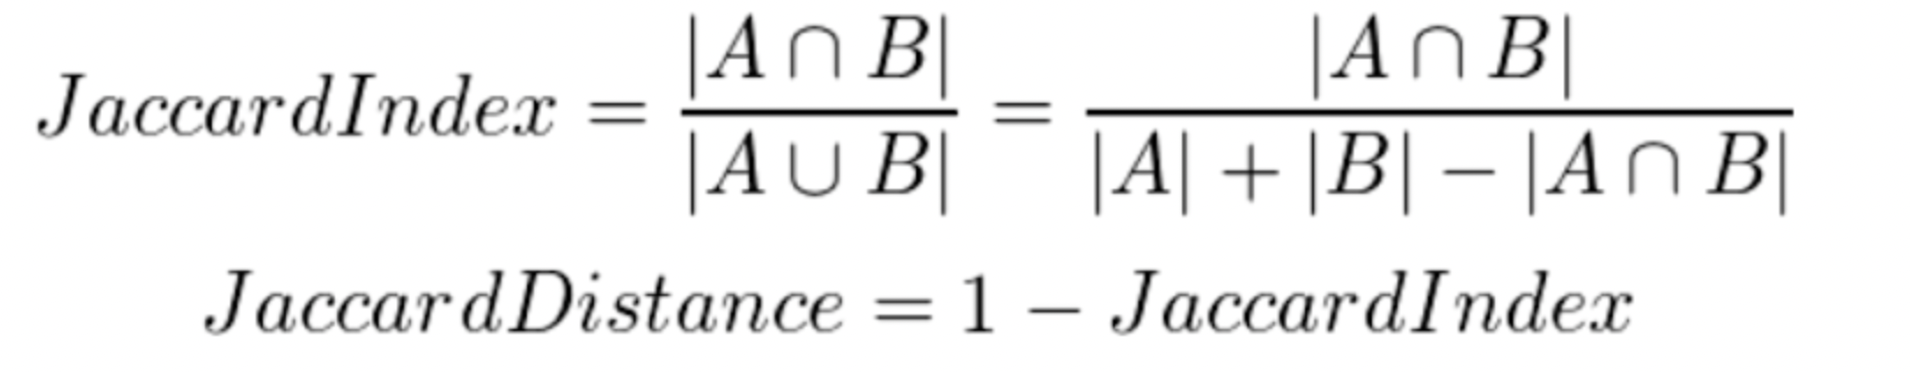 Jaccard distance formula